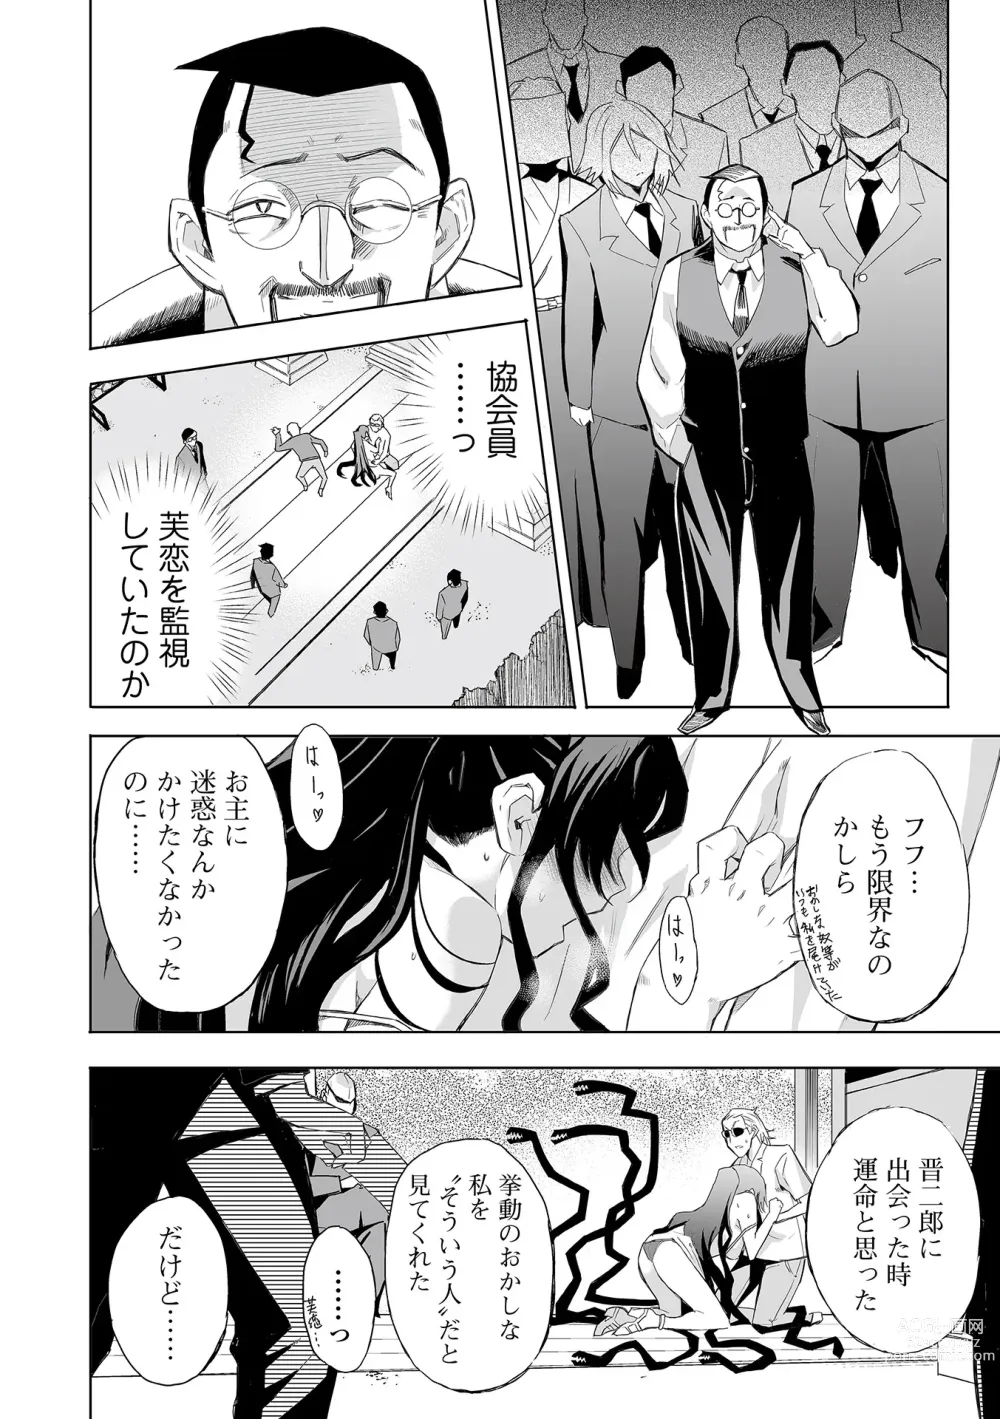 Page 94 of manga Web Comic Toutetsu Vol. 82